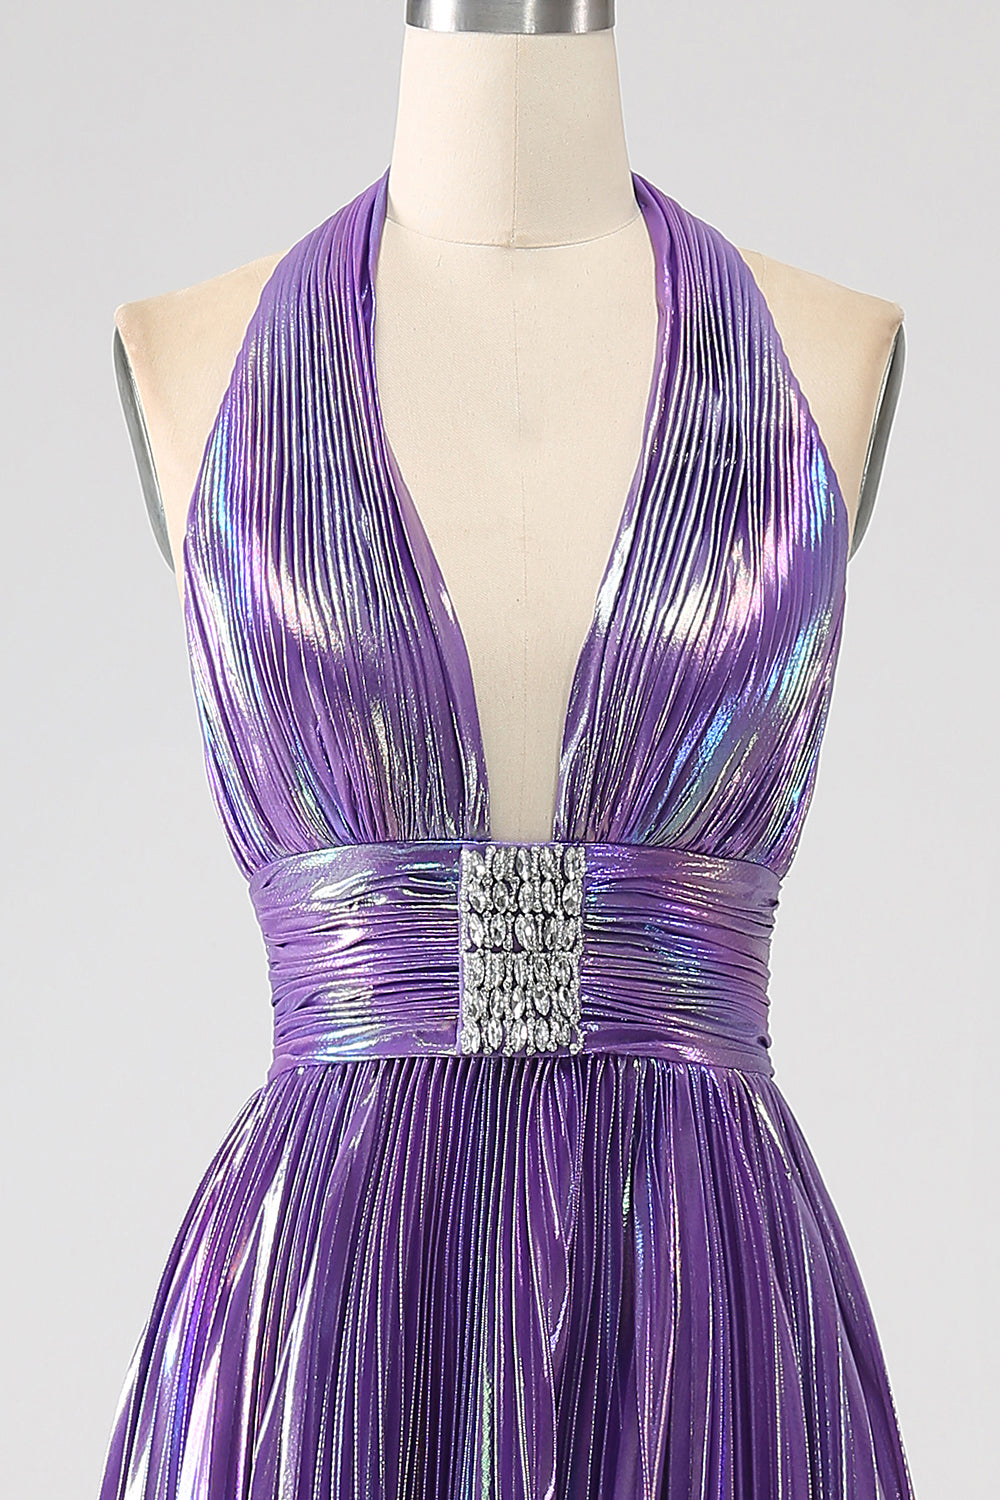 Glitter Purple Pleated Metallic Long Prom Dress with Slit